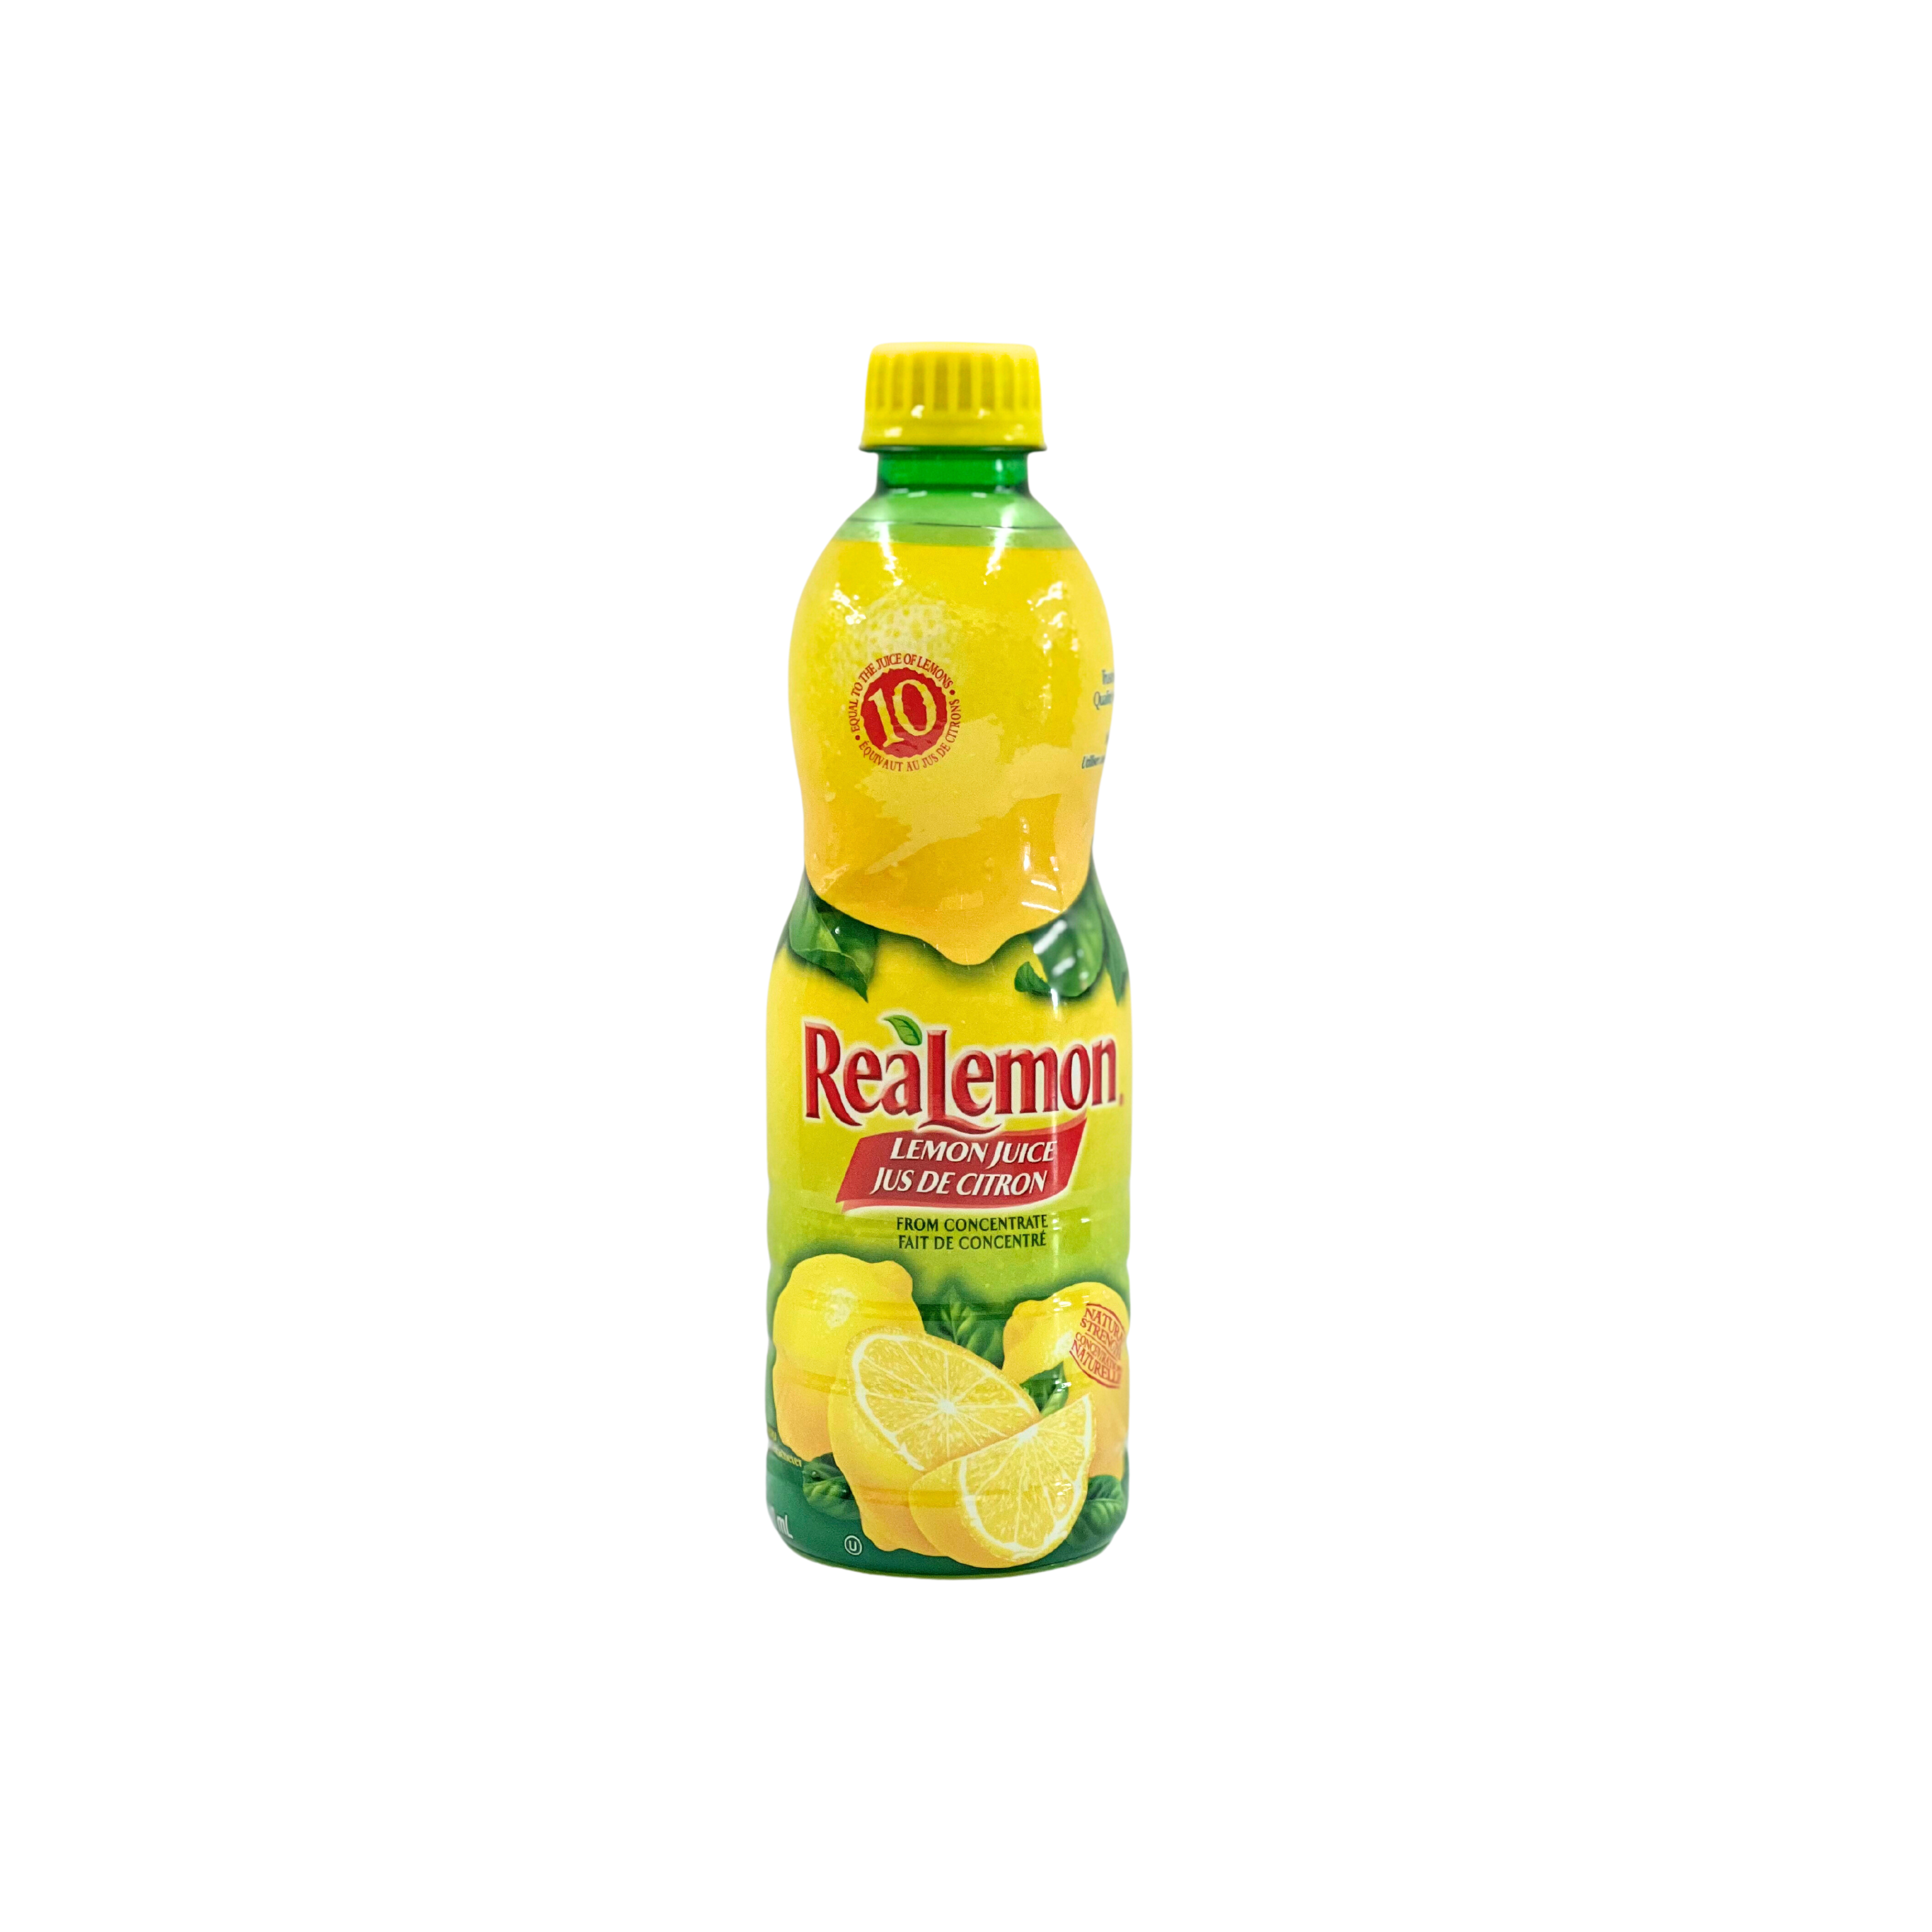 Realemon Lemon Juice 440ml